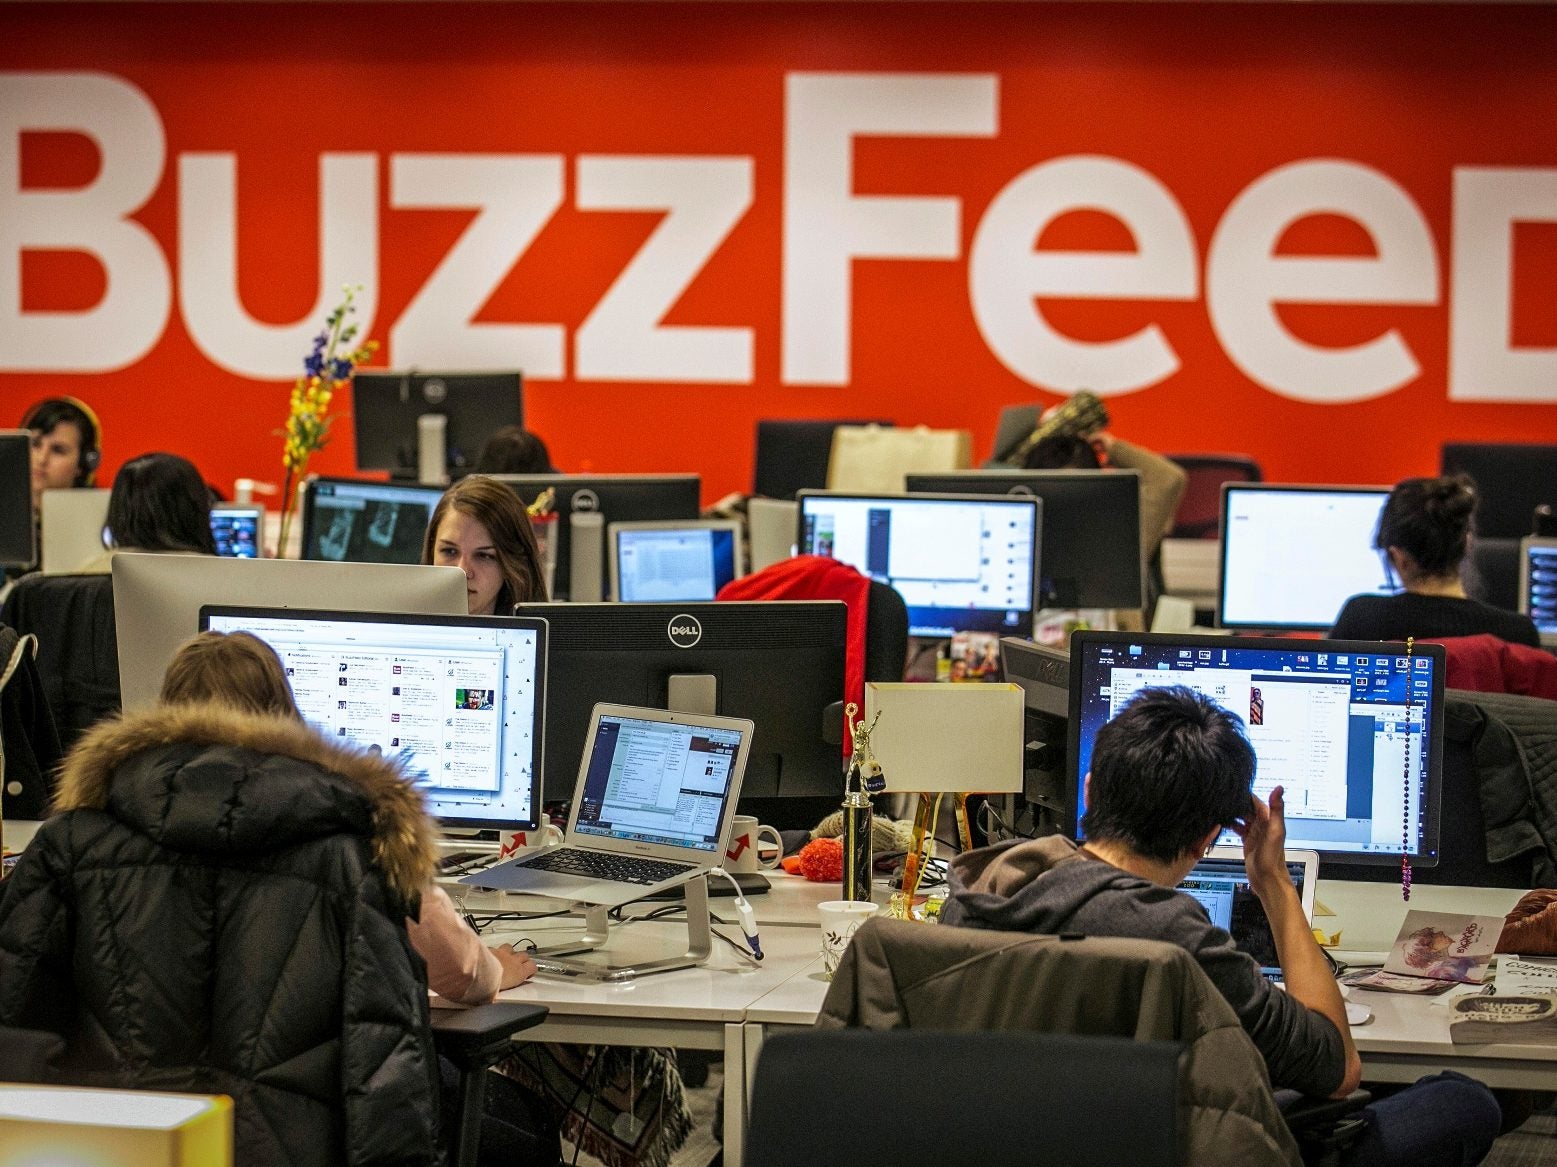 Buzzfeed UK sees exodus of newsroom talent following job cuts